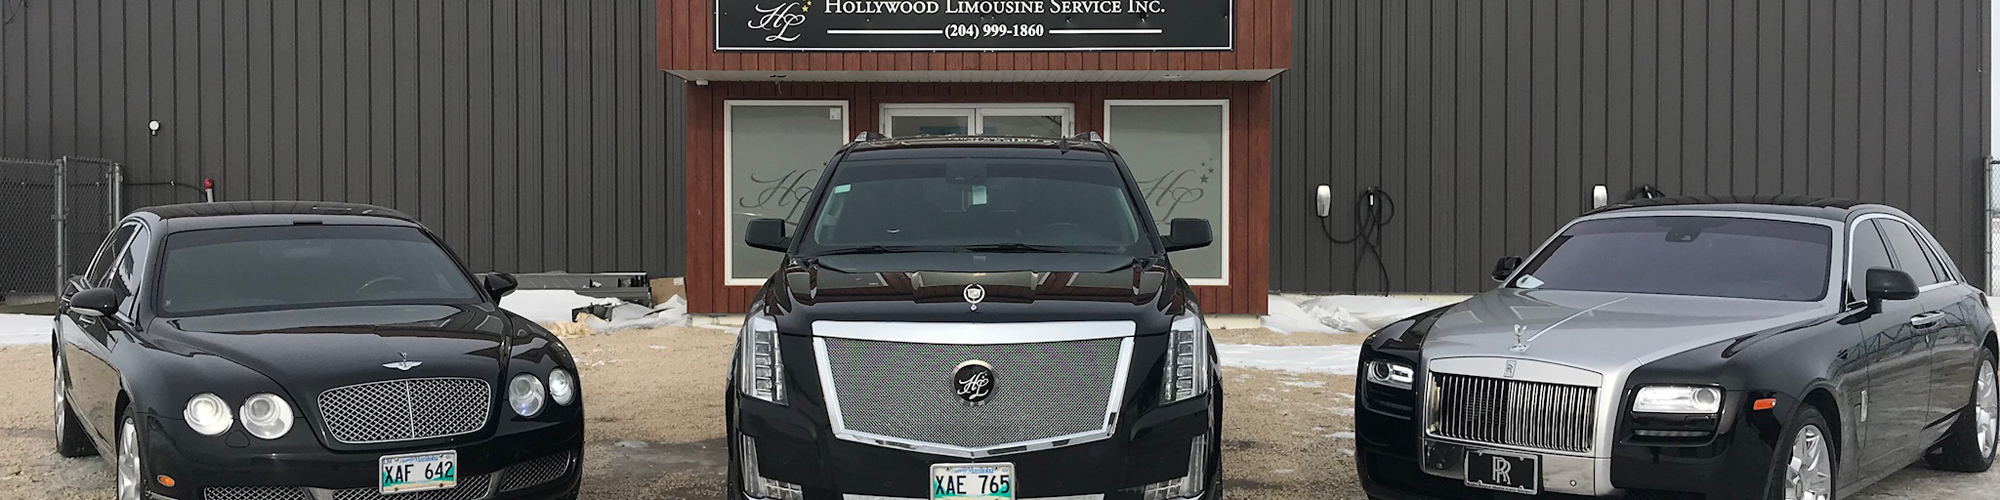 Hollywood Limousine Service Inc. head office